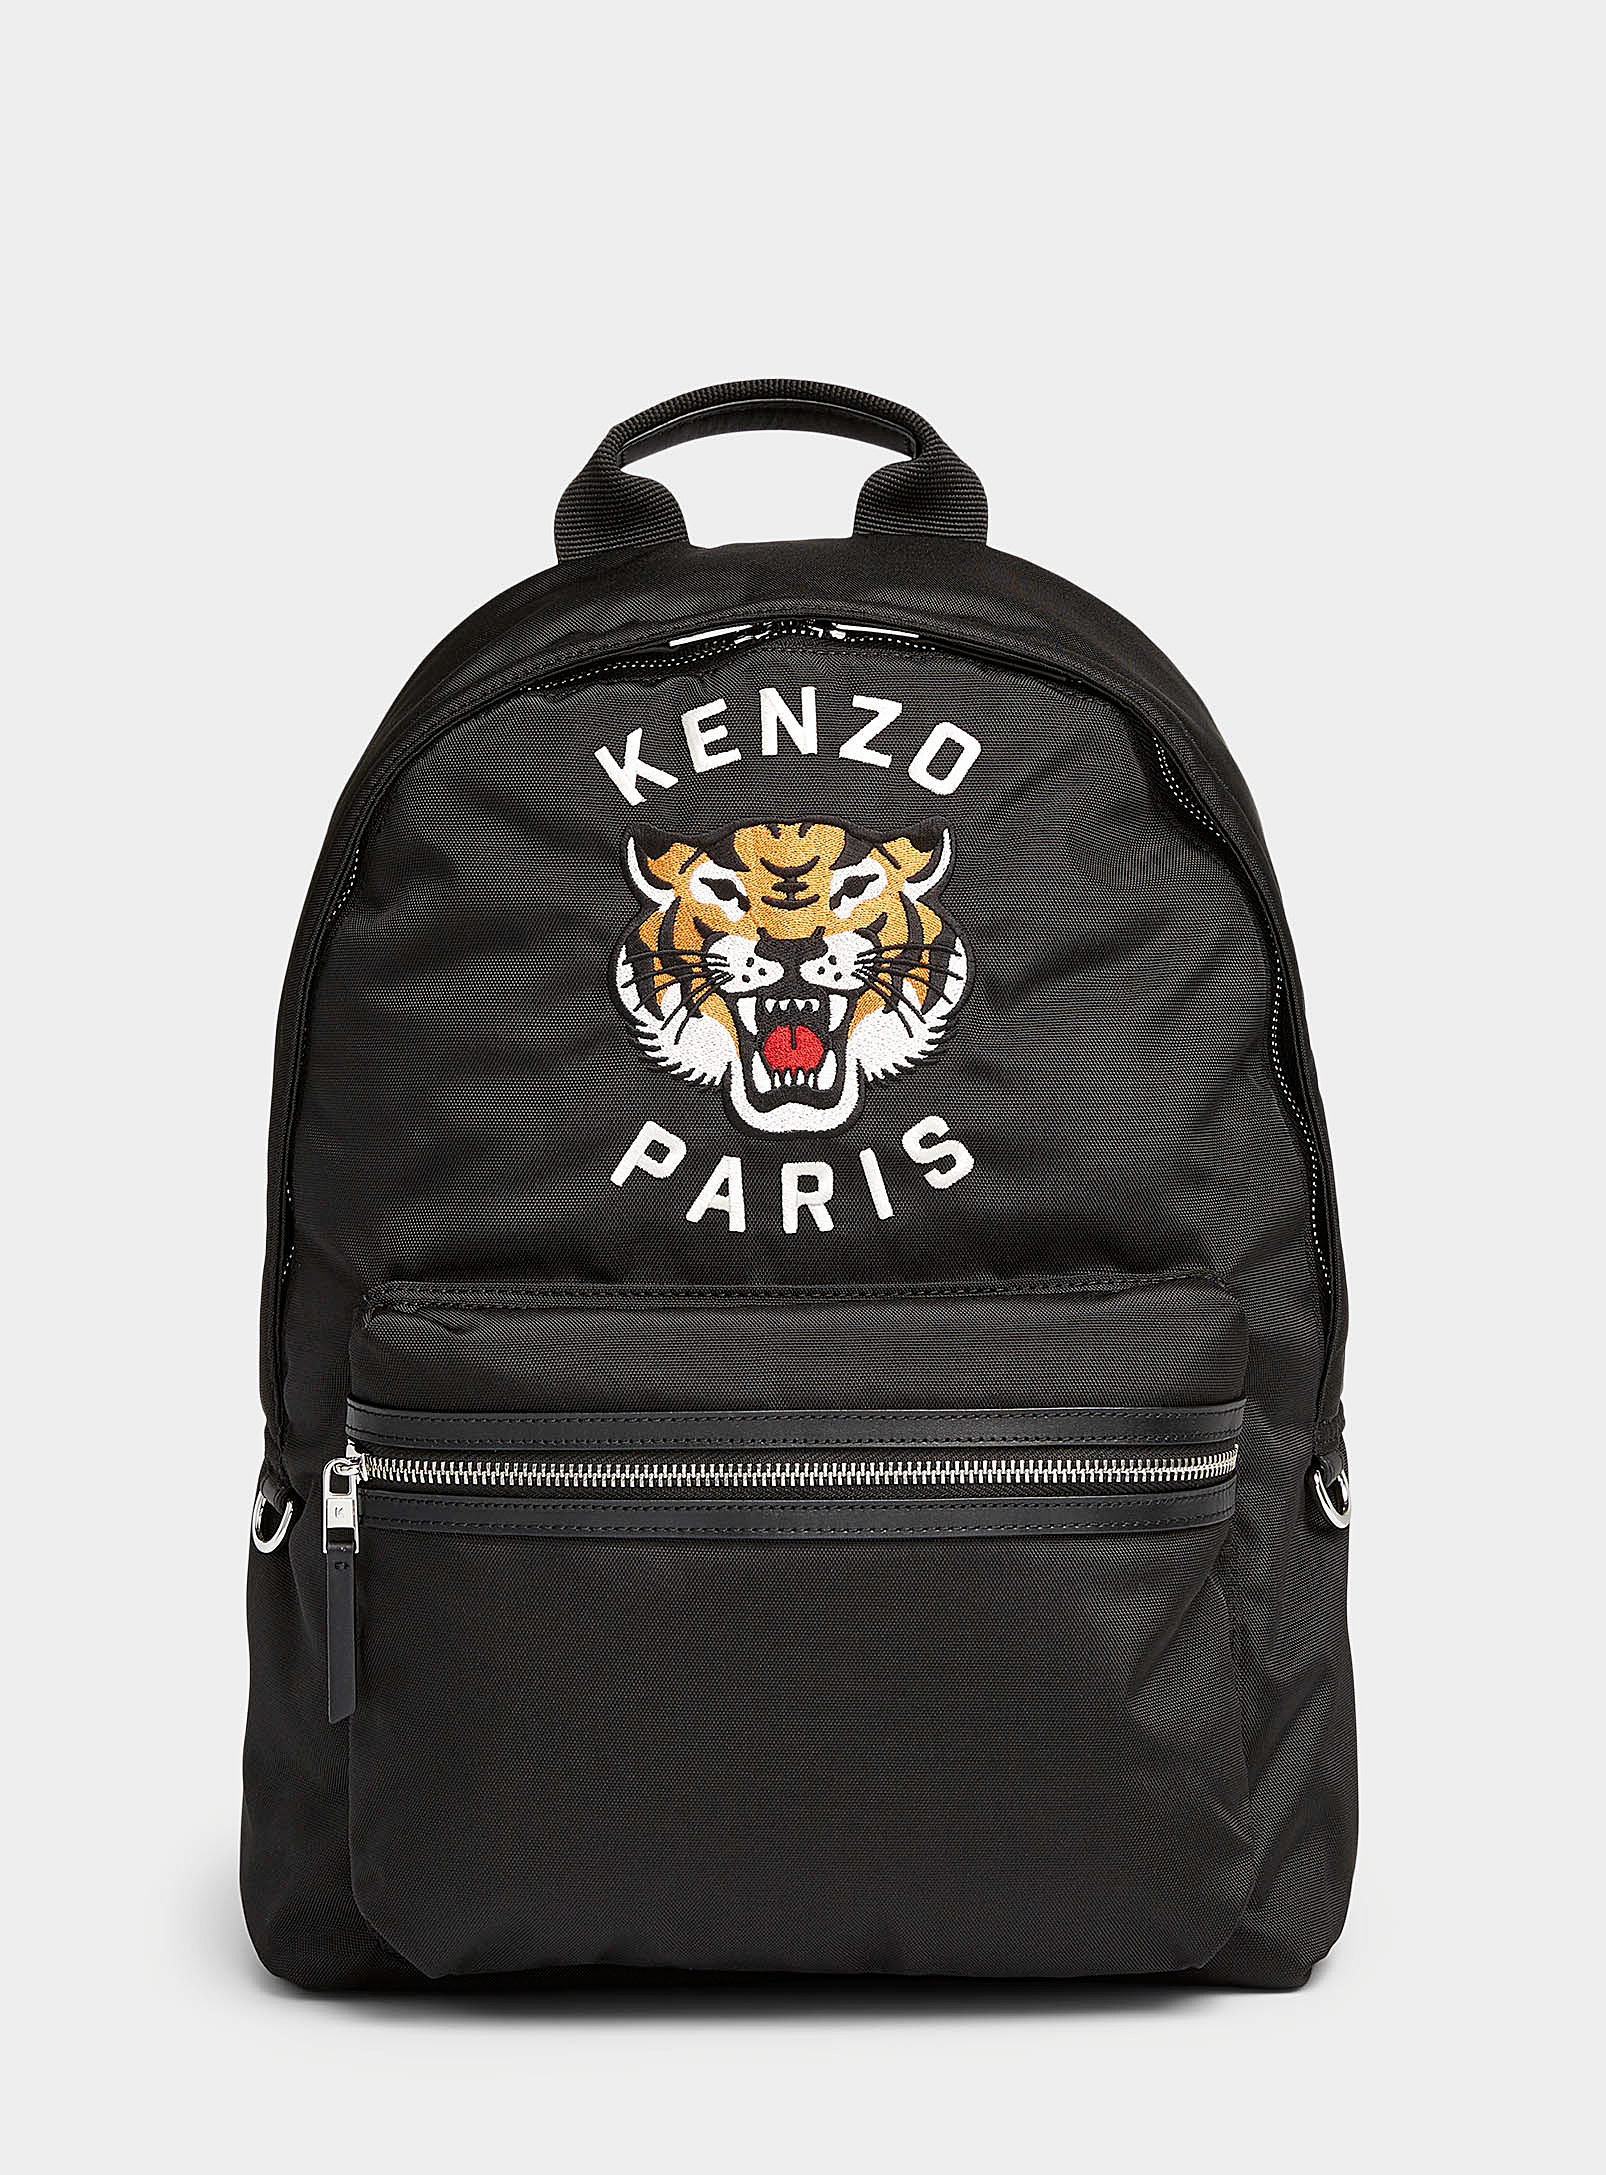 Kenzo - Le sac à dos tigre brodé